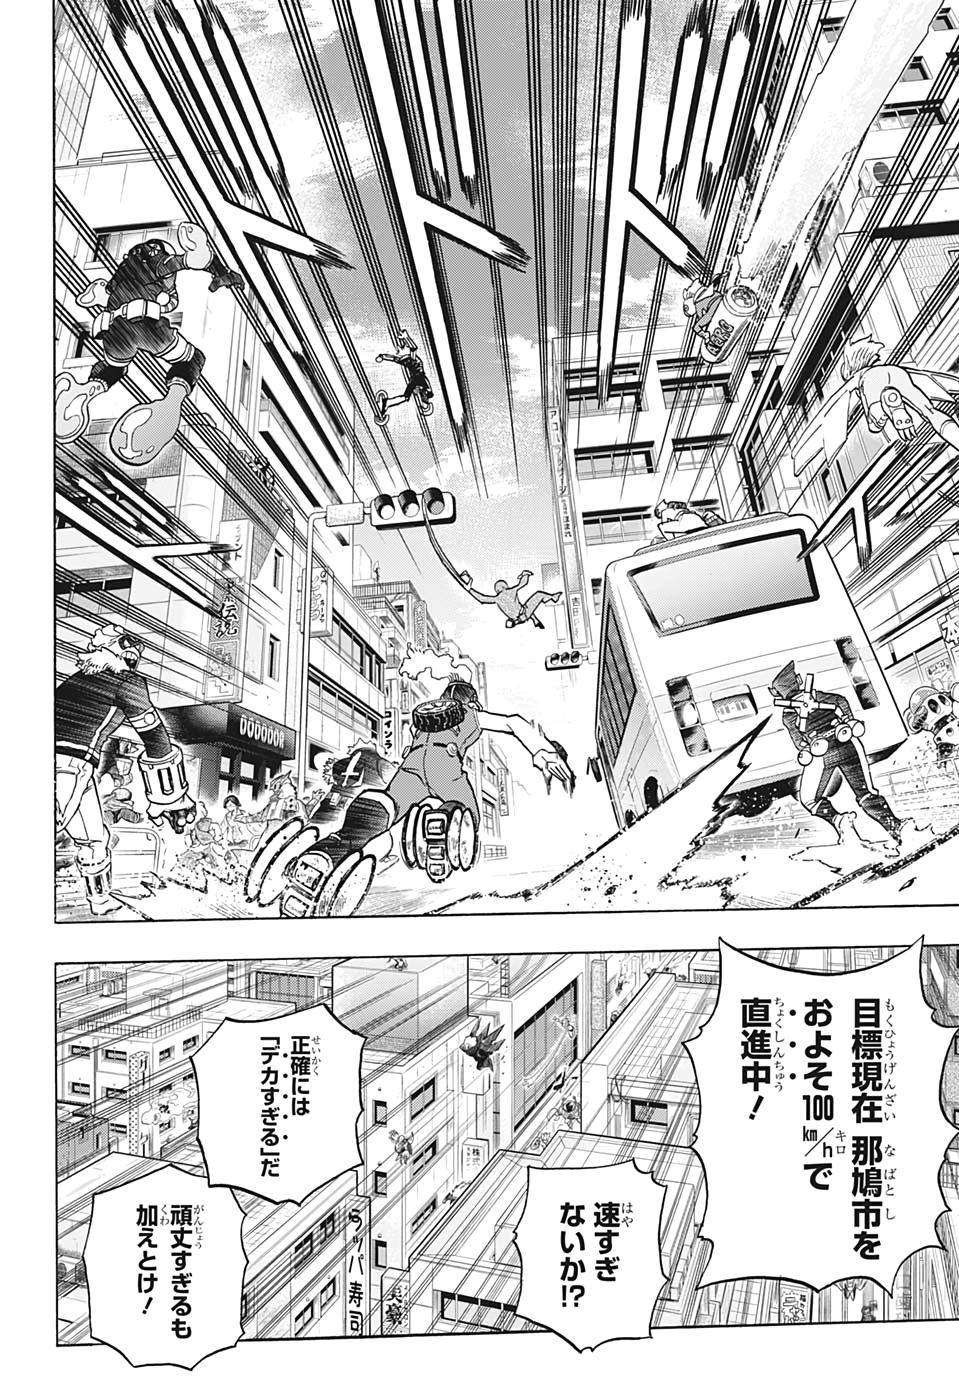 Boku no Hero Academia - Chapter 288 - Page 2